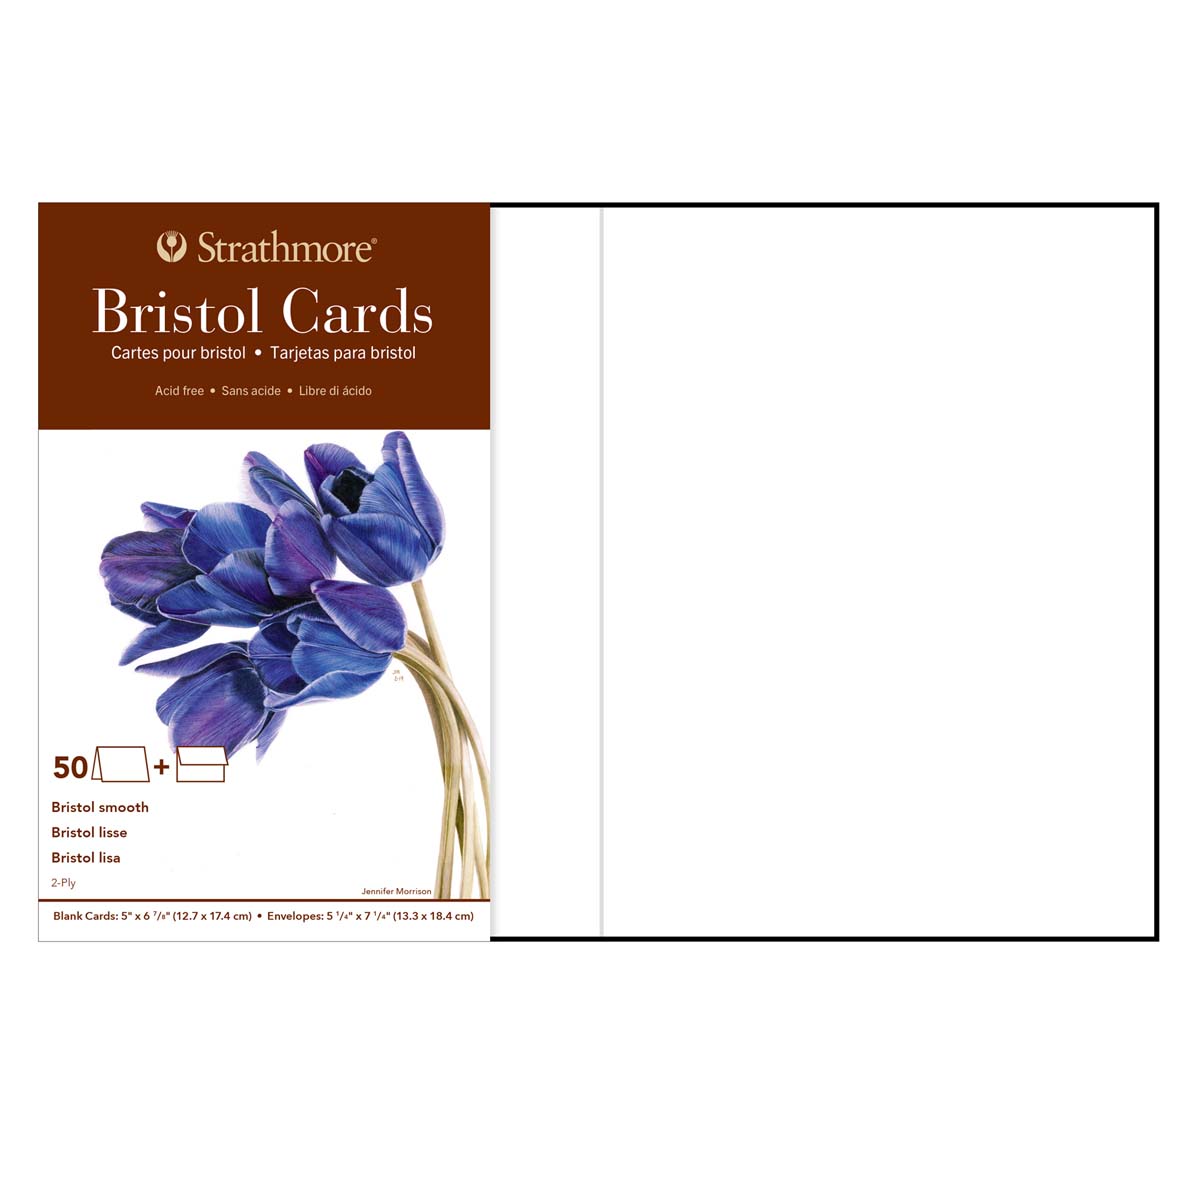 Strathmore 400 Series Bristol Cards and Envelopes